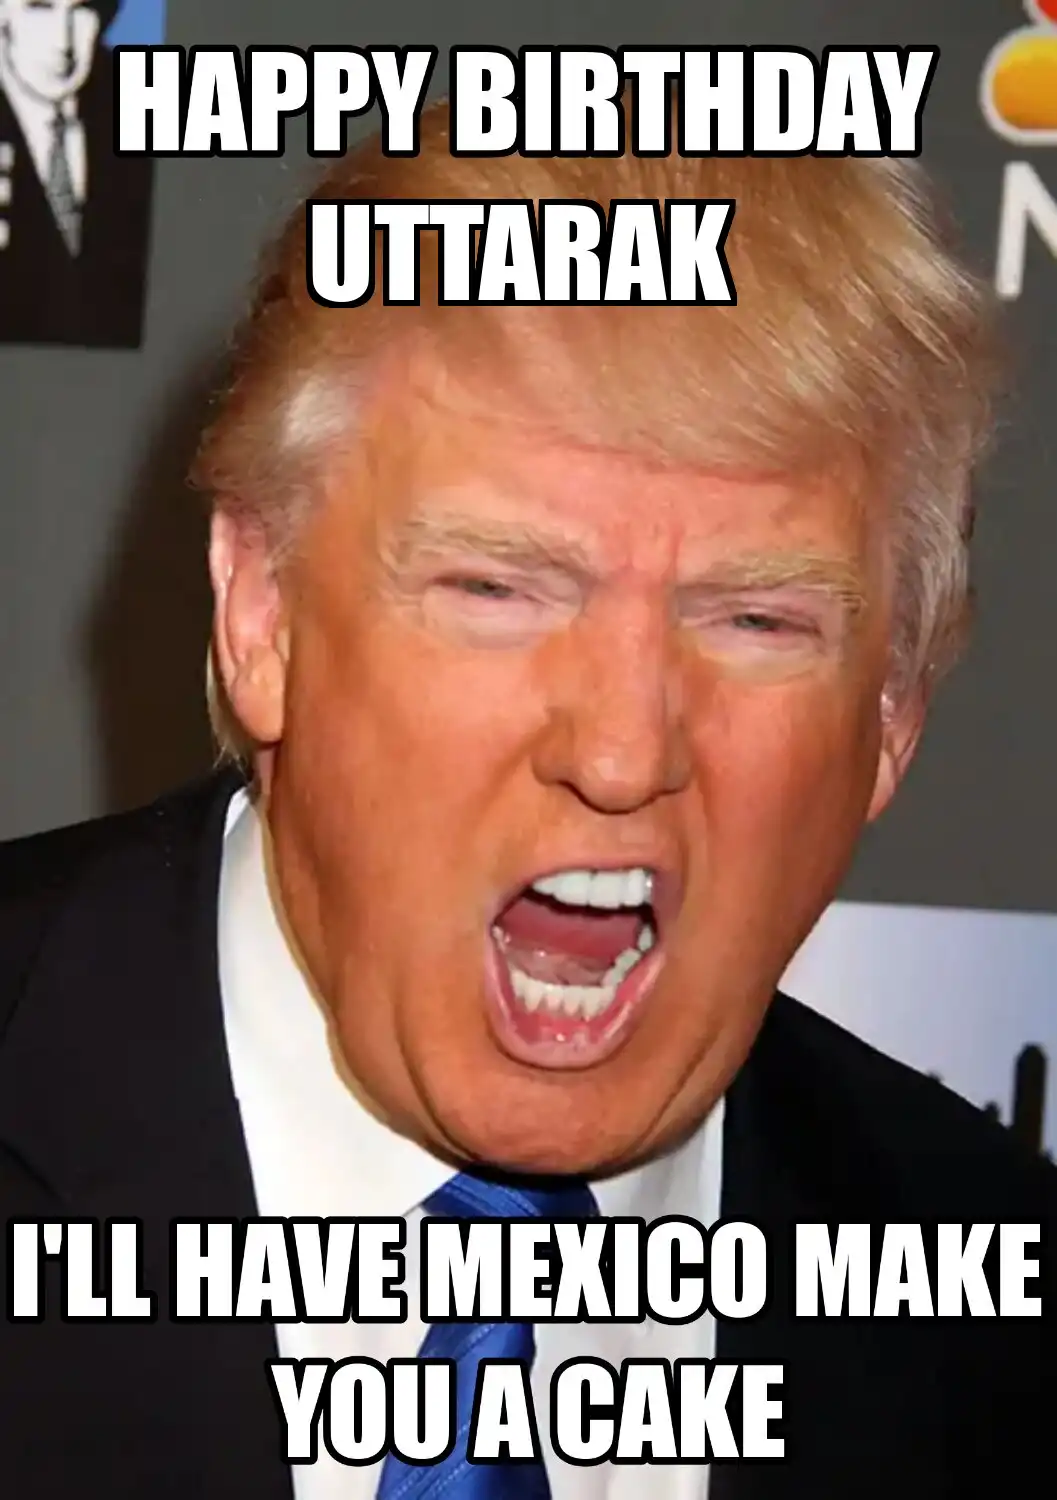 Happy Birthday Uttarak Mexico Make You A Cake Meme